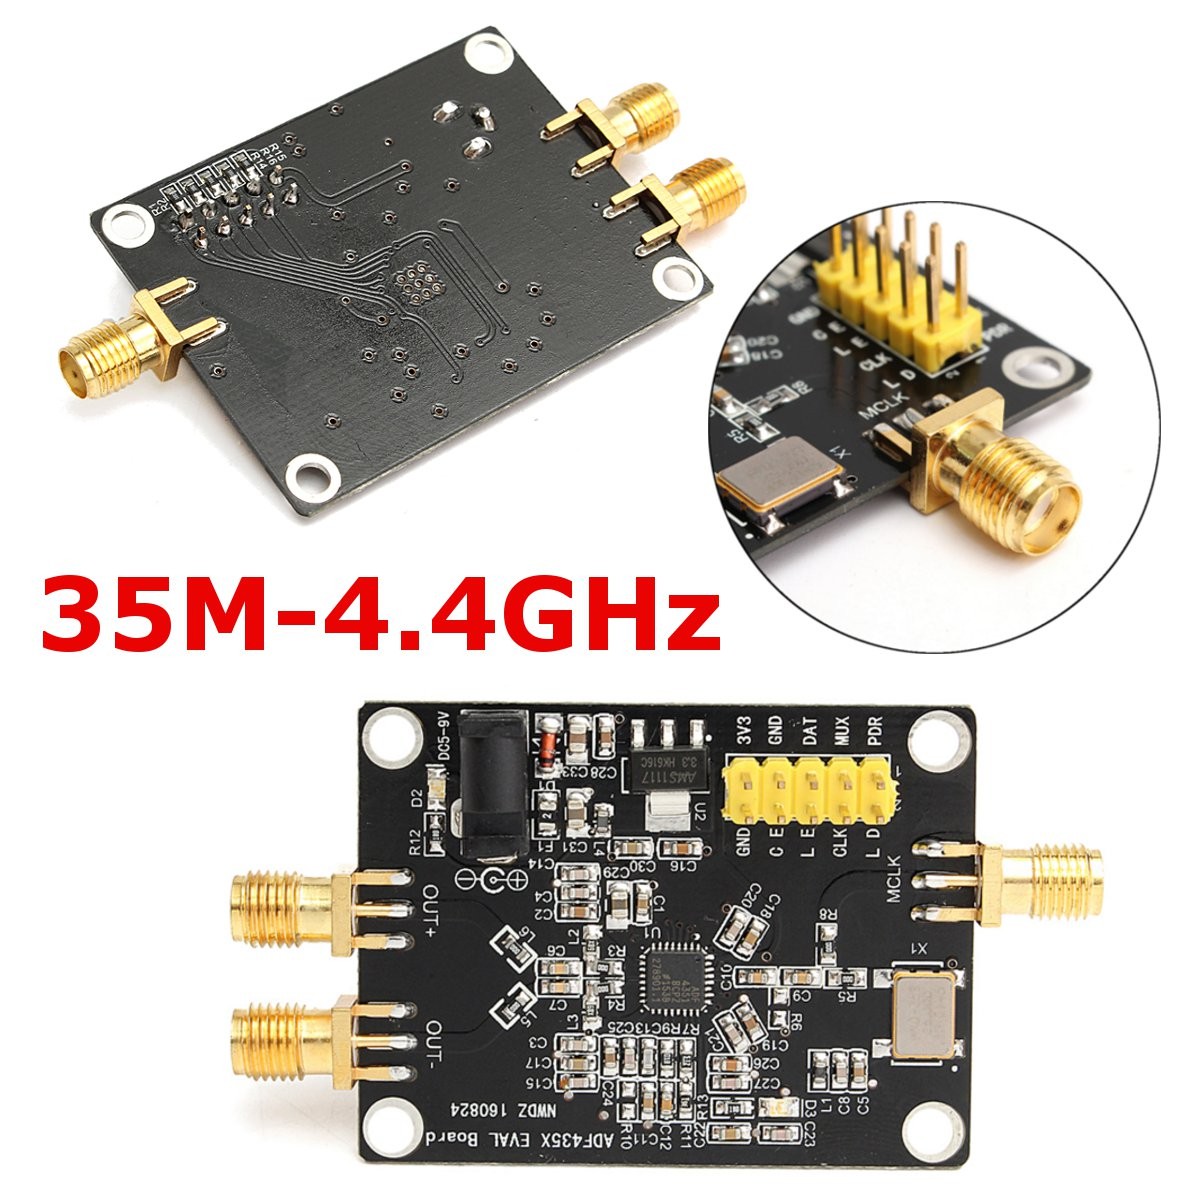 35M-44GHz-PLL-RF-Signal-Source-Frequency-Synthesizer-ADF4351-Development-Board-1129041